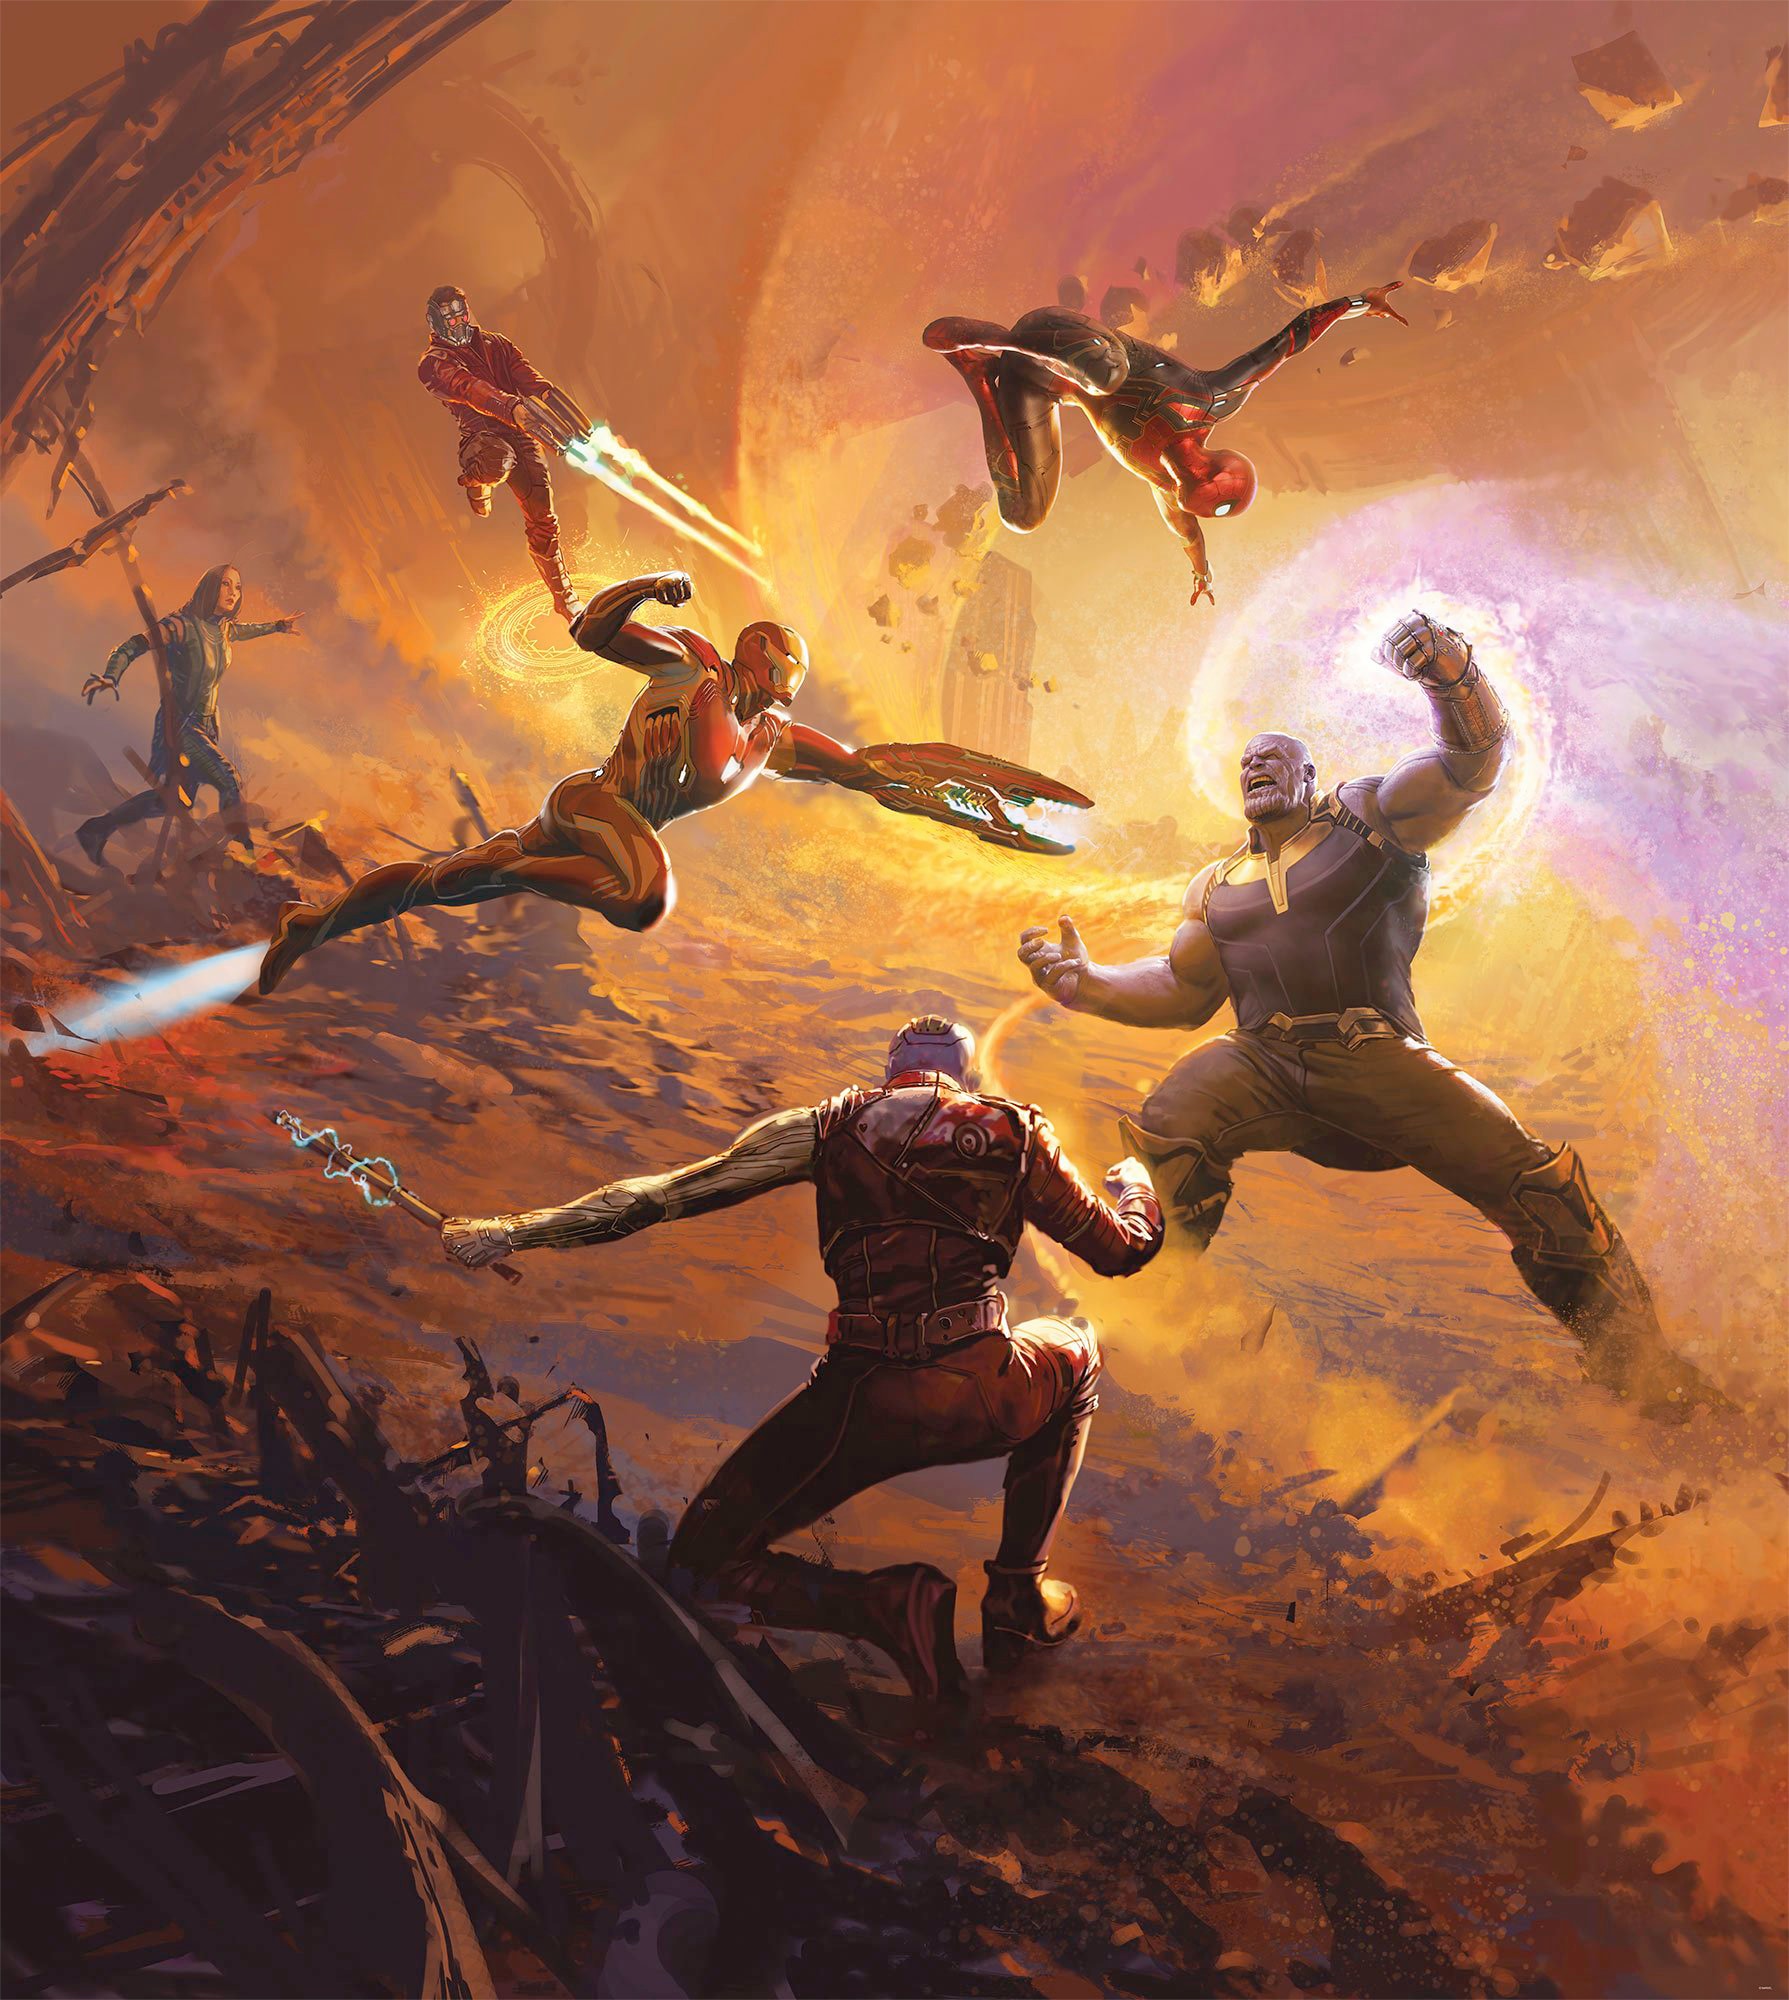 Vliestapete »Avengers Epic Battle Titan«, 250x280 cm (Breite x Höhe)